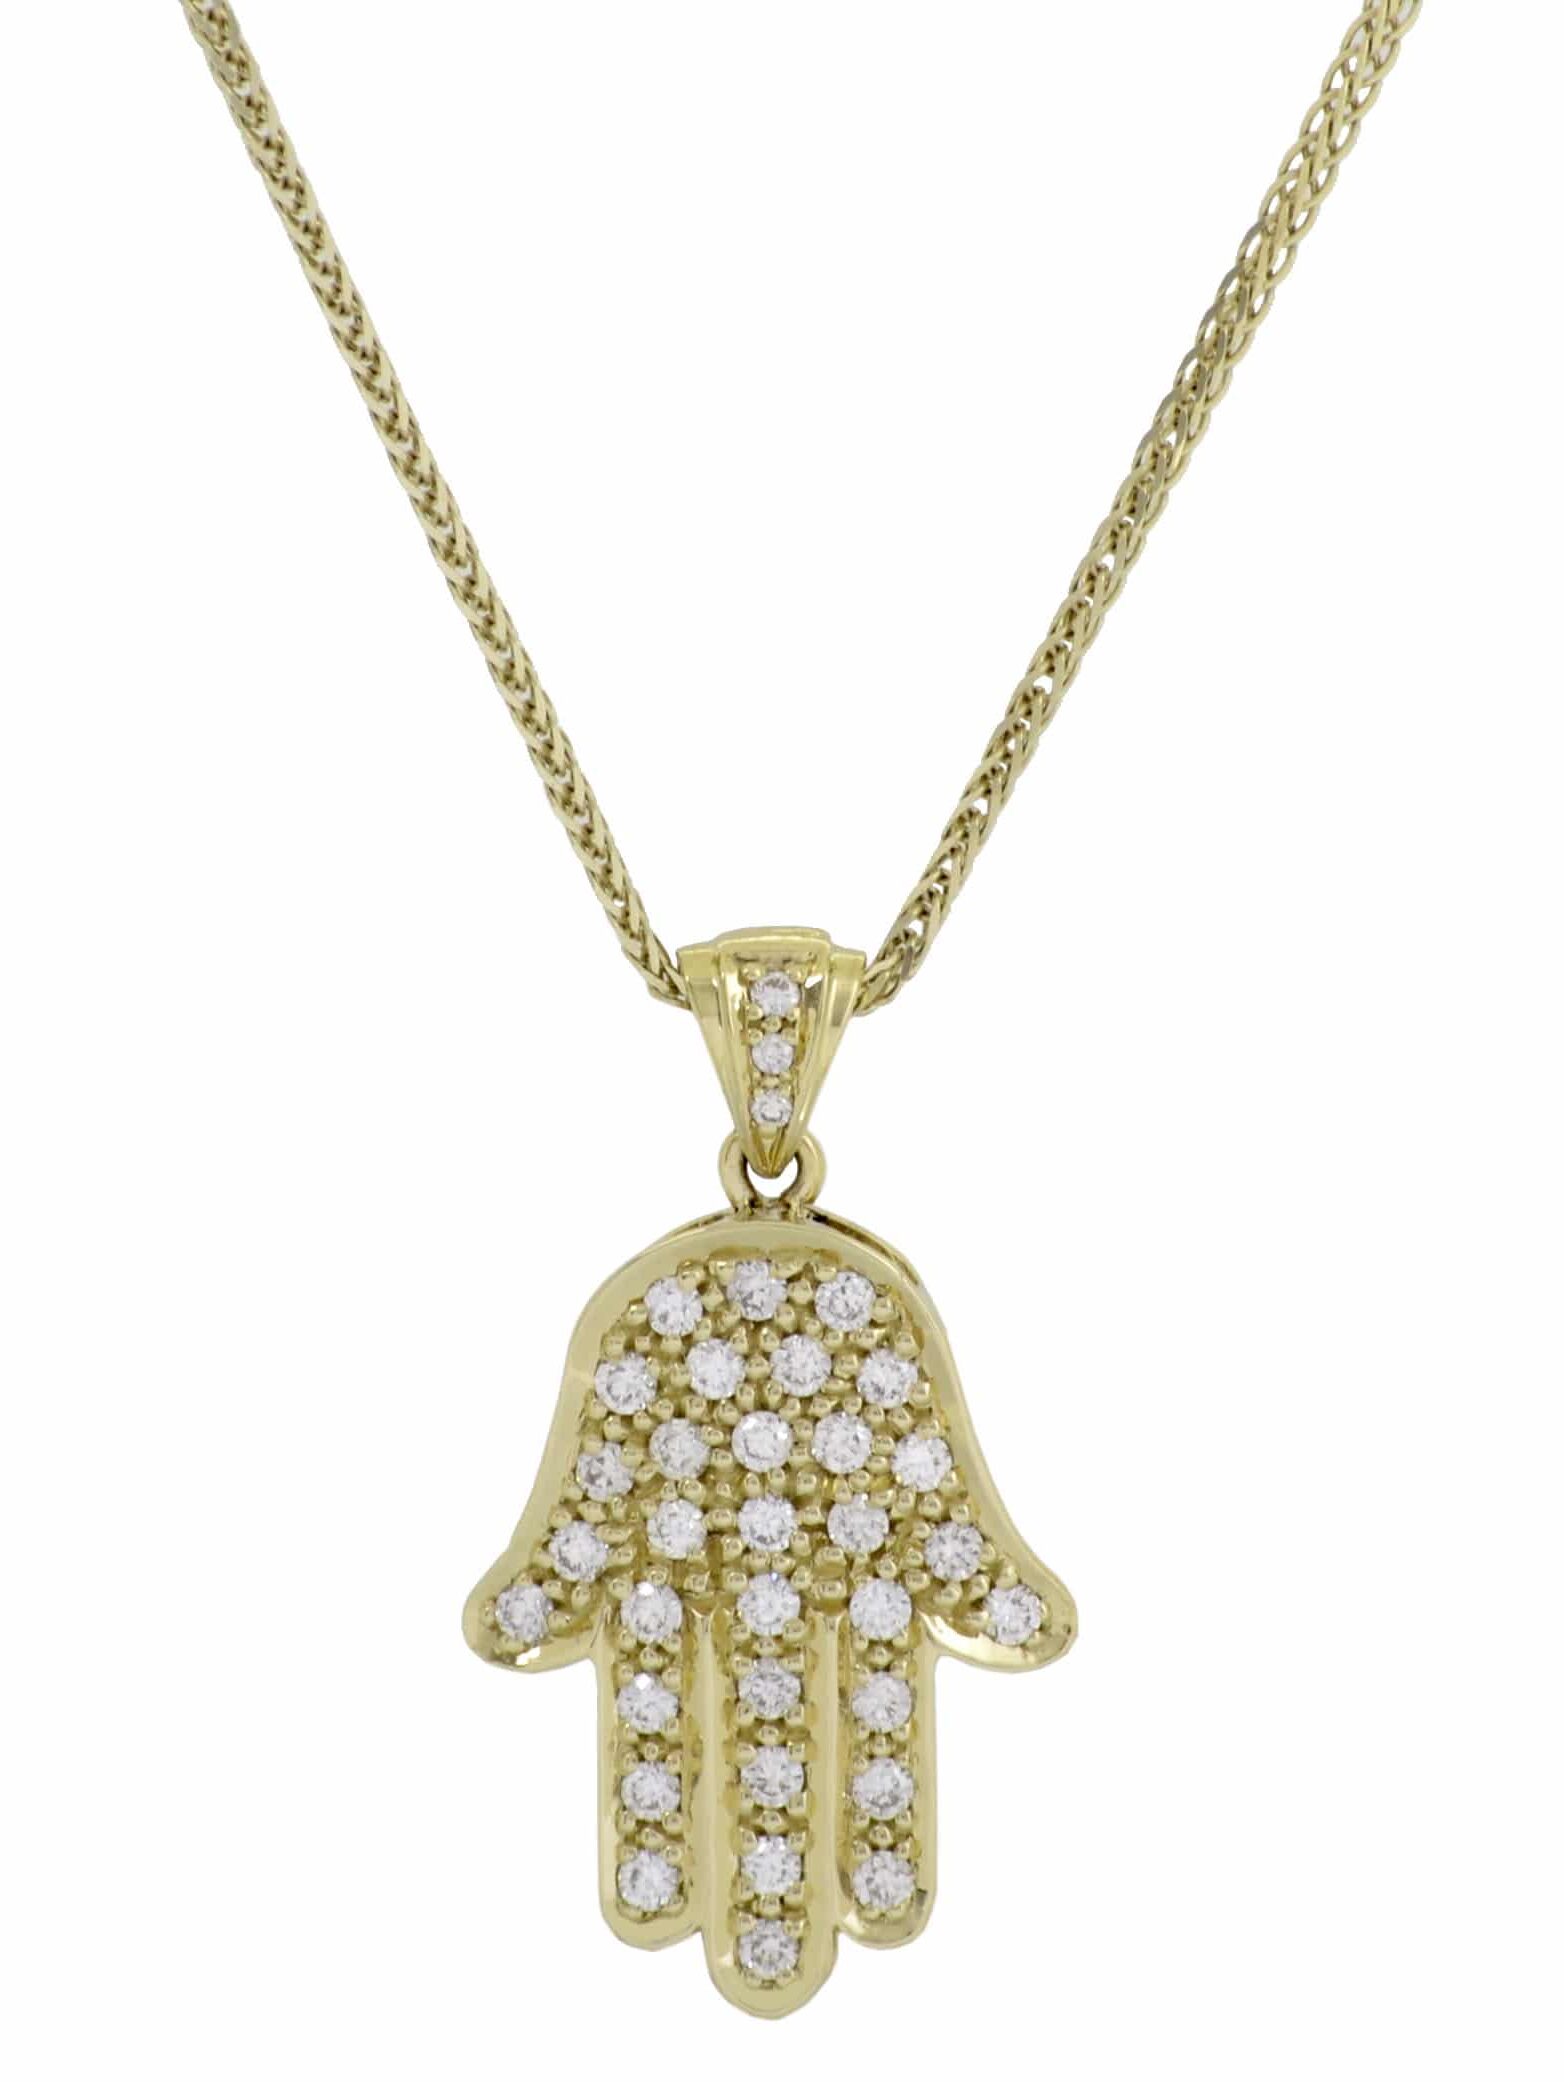 Shiny 14K Yellow Gold Hamsa Pendant with Diamonds